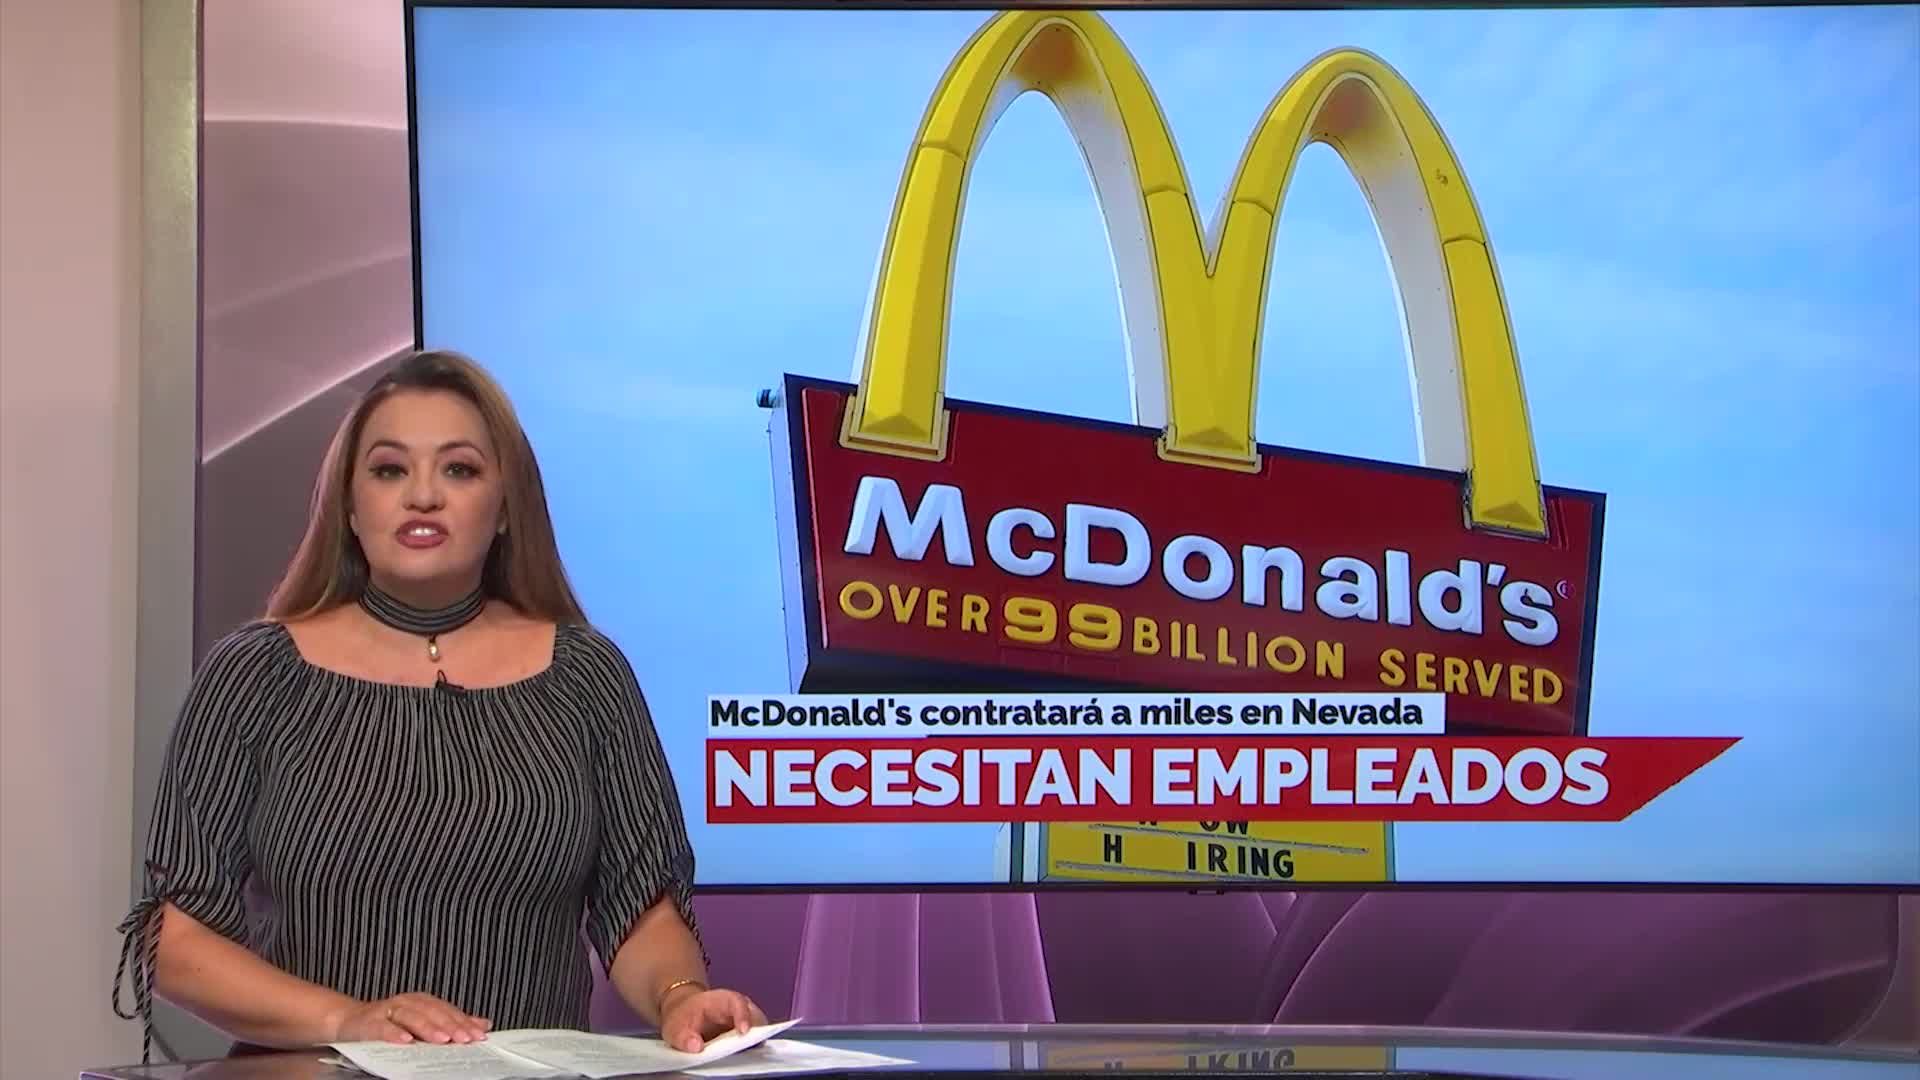 McDonald's contrata a miles de empleados